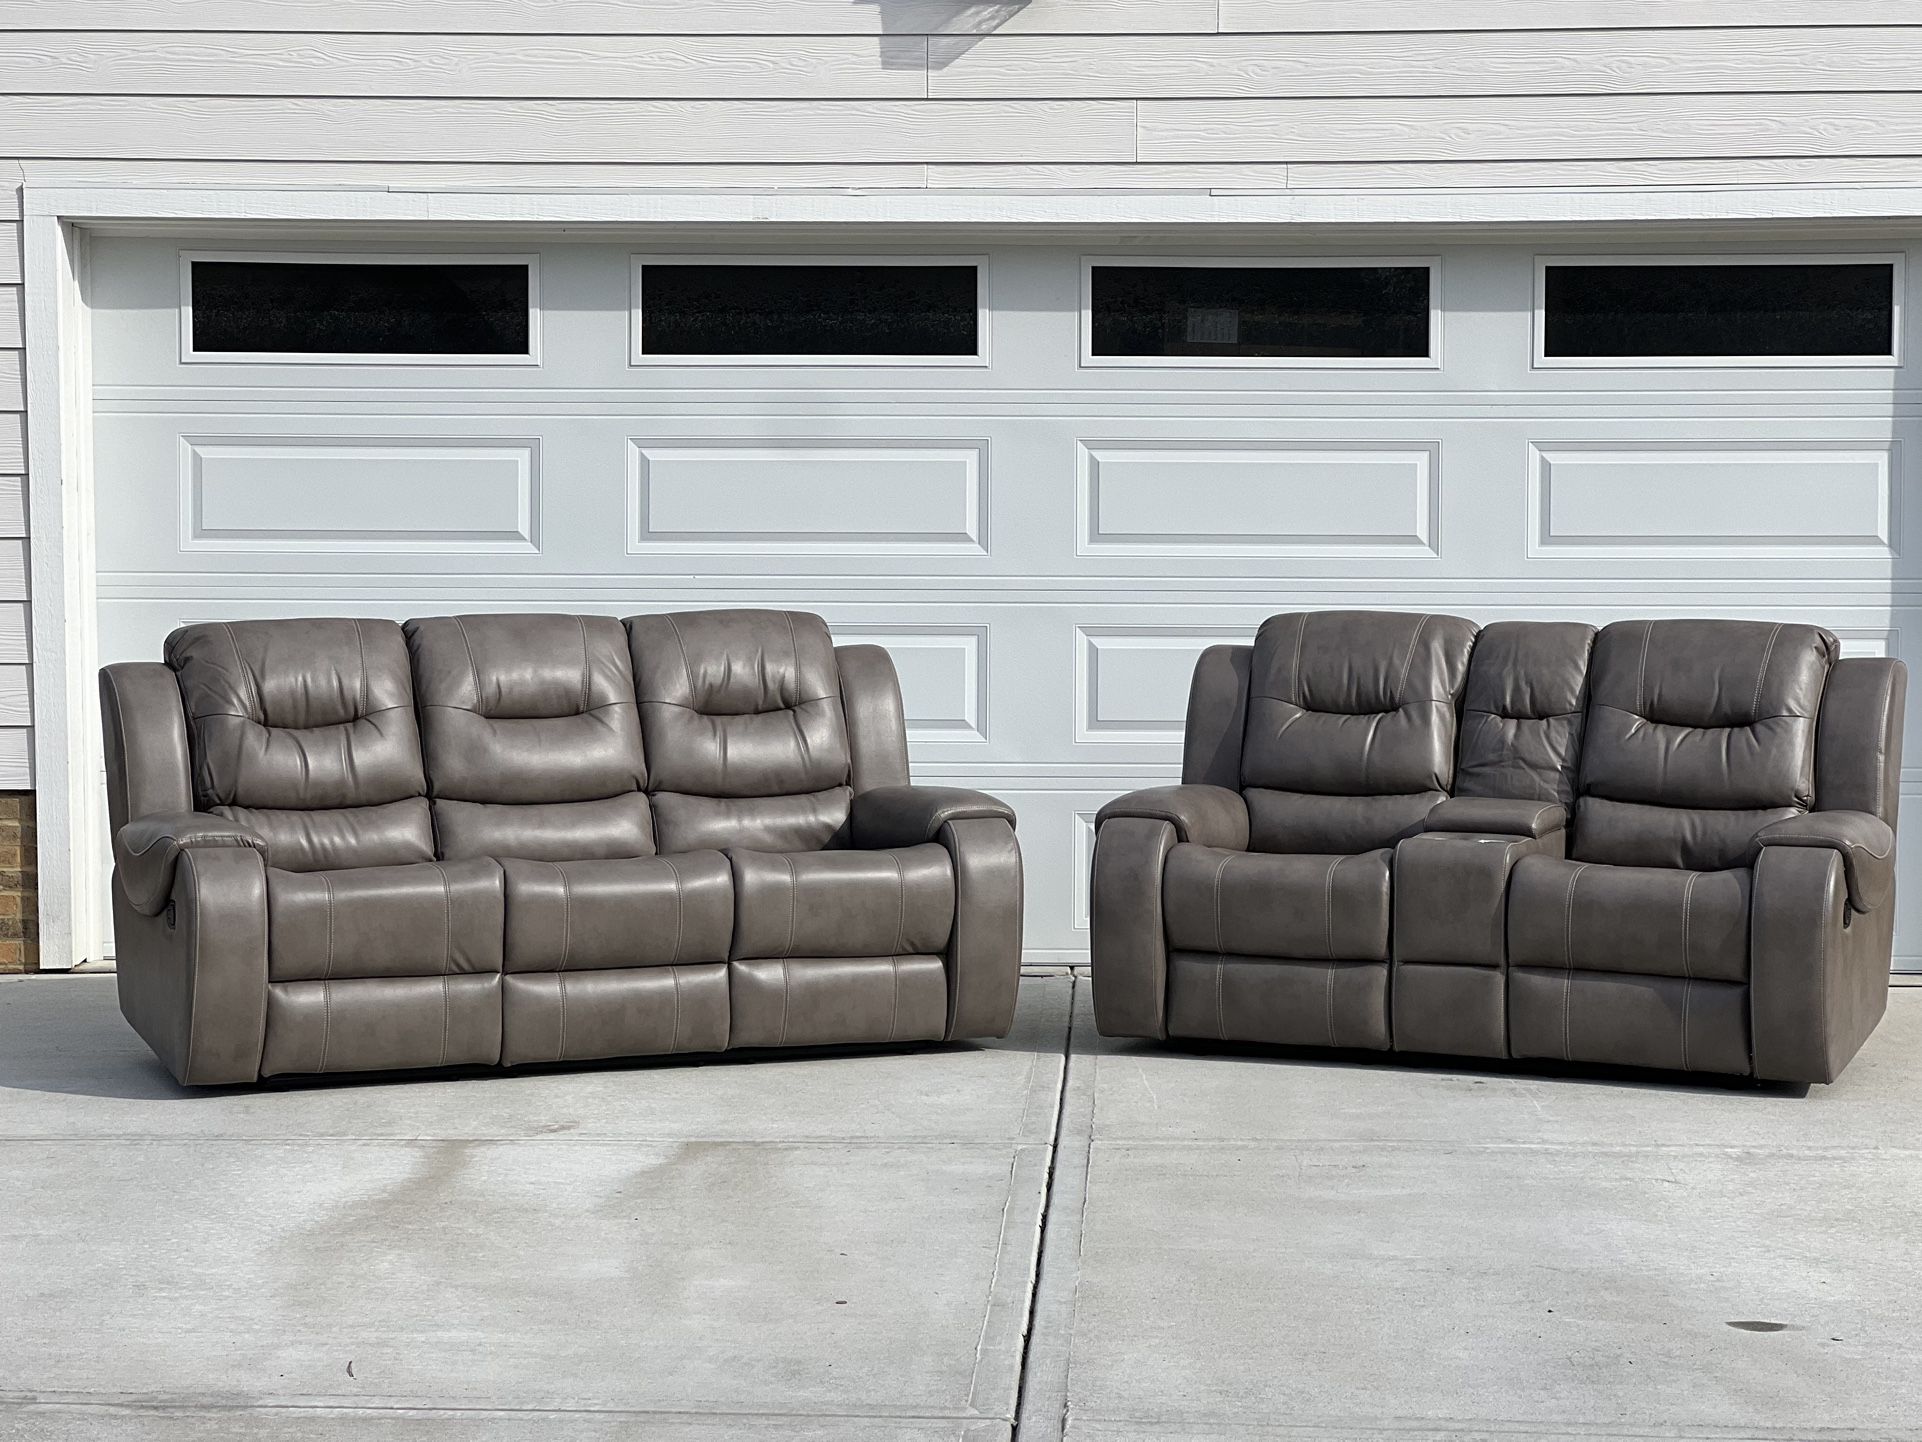 ⚪️Brand New Leather Reclining Sofa & Love Seat in Smoke Gray